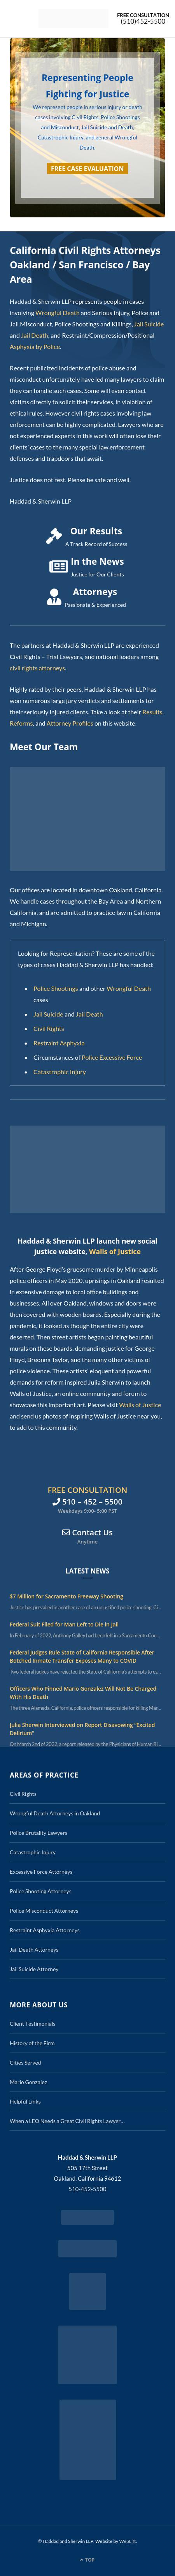 Haddad & Sherwin LLP - Oakland CA Lawyers